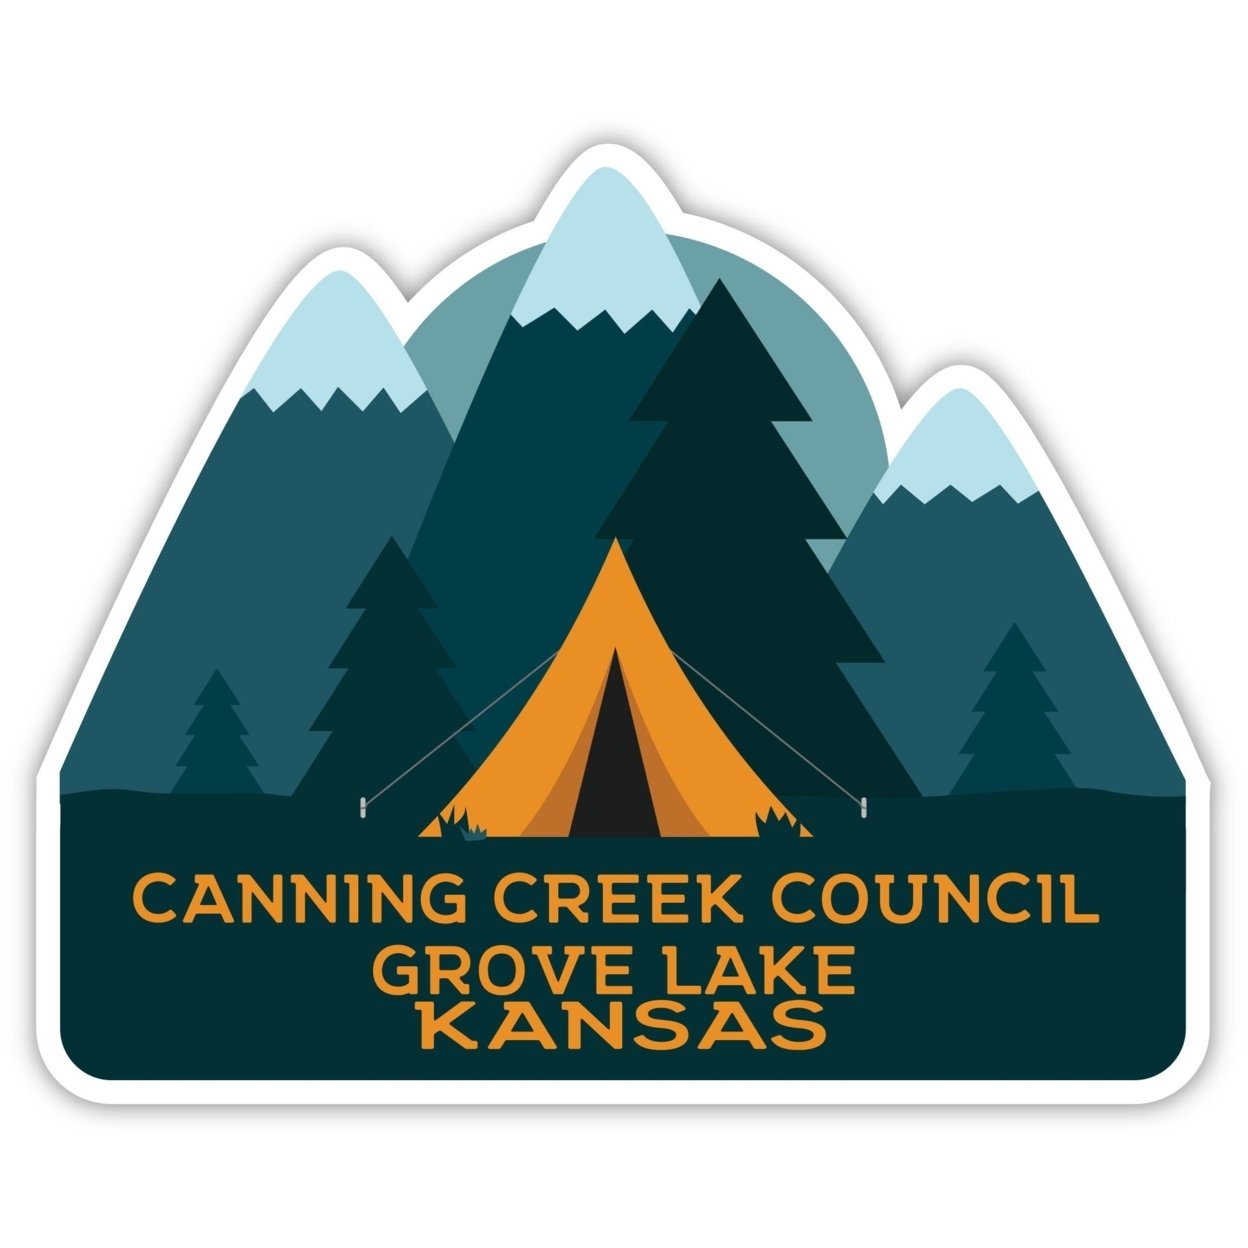 Canning Creek Council Grove Lake Kansas Souvenir Decorative Stickers (Choose Theme And Size) - Single Unit, 6-Inch, Tent